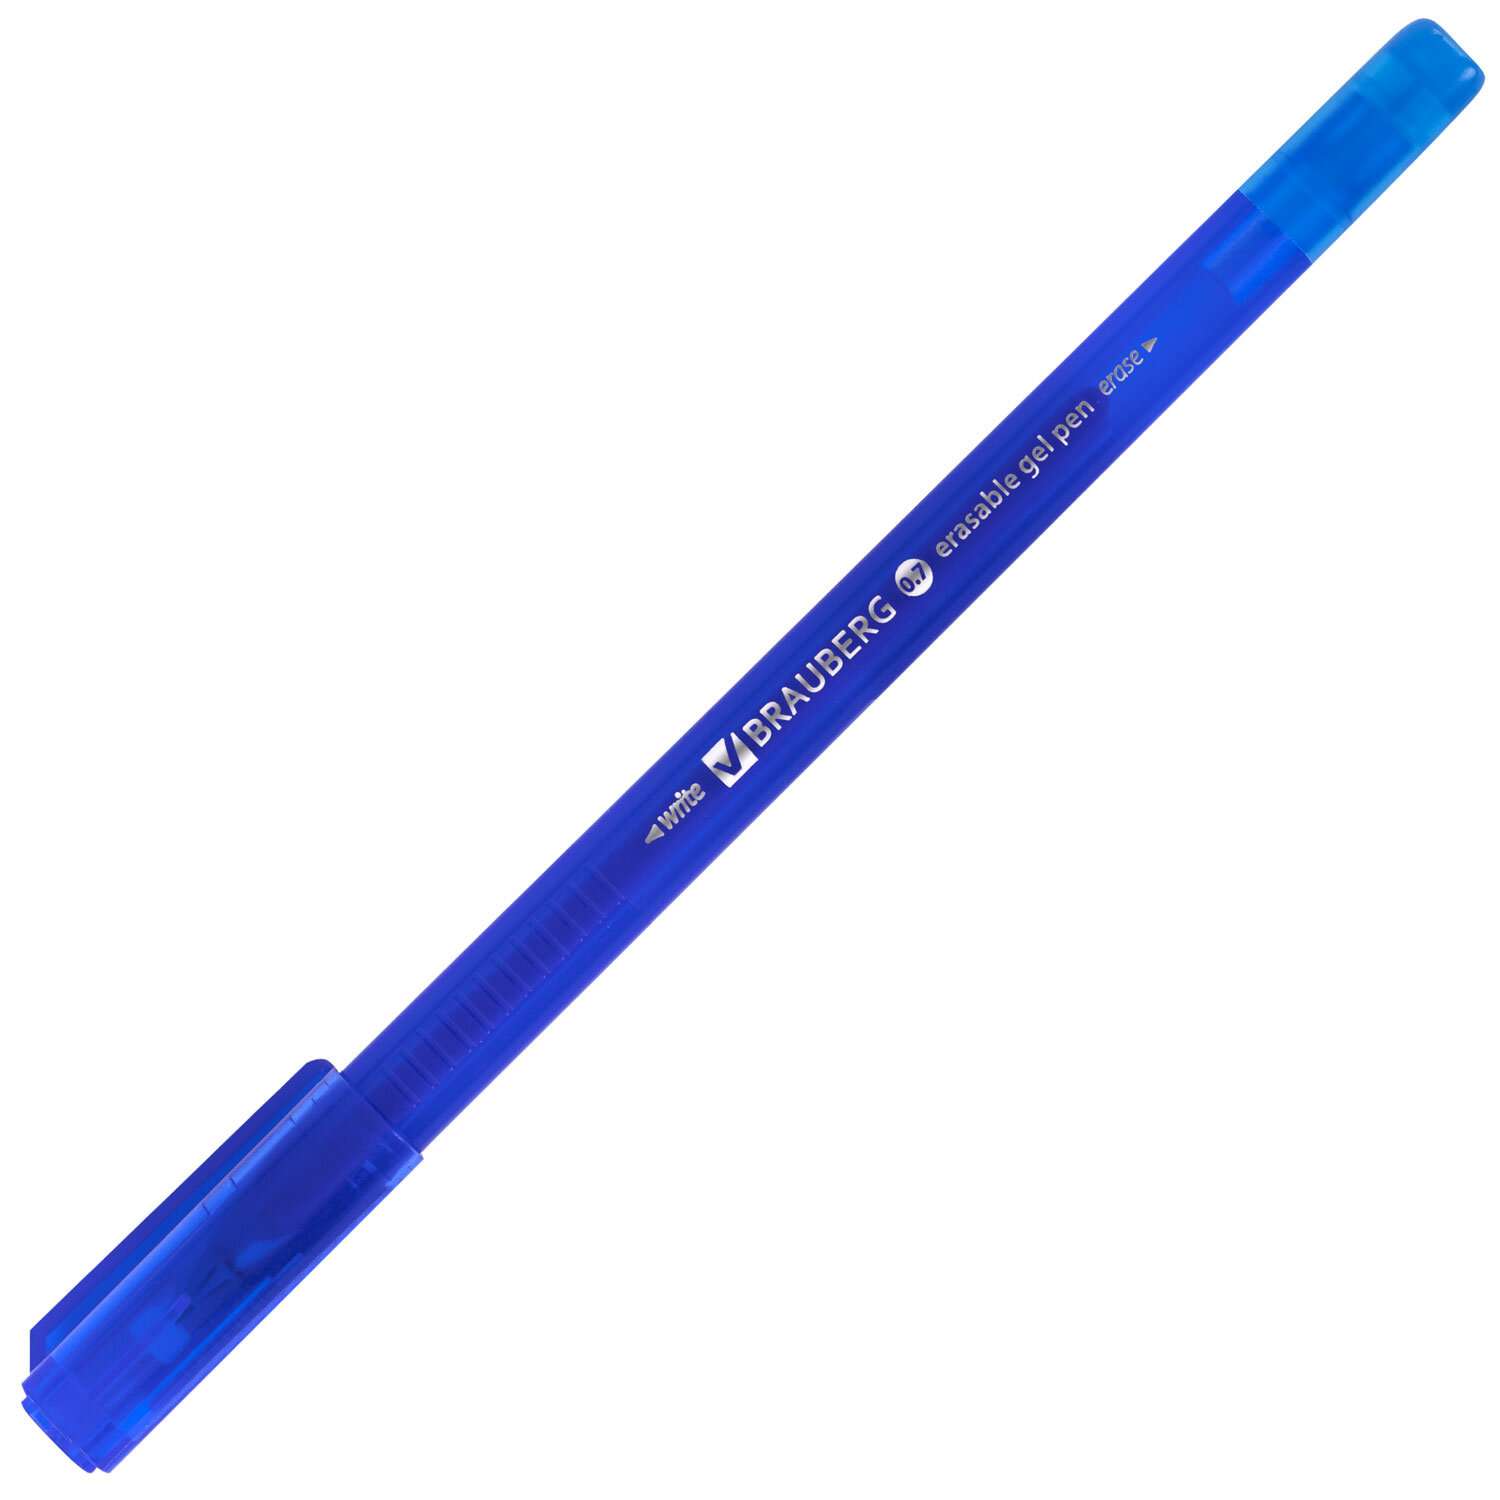 Ручки гелевые Brauberg пиши стирай набор 4 штуки синие - фото 6